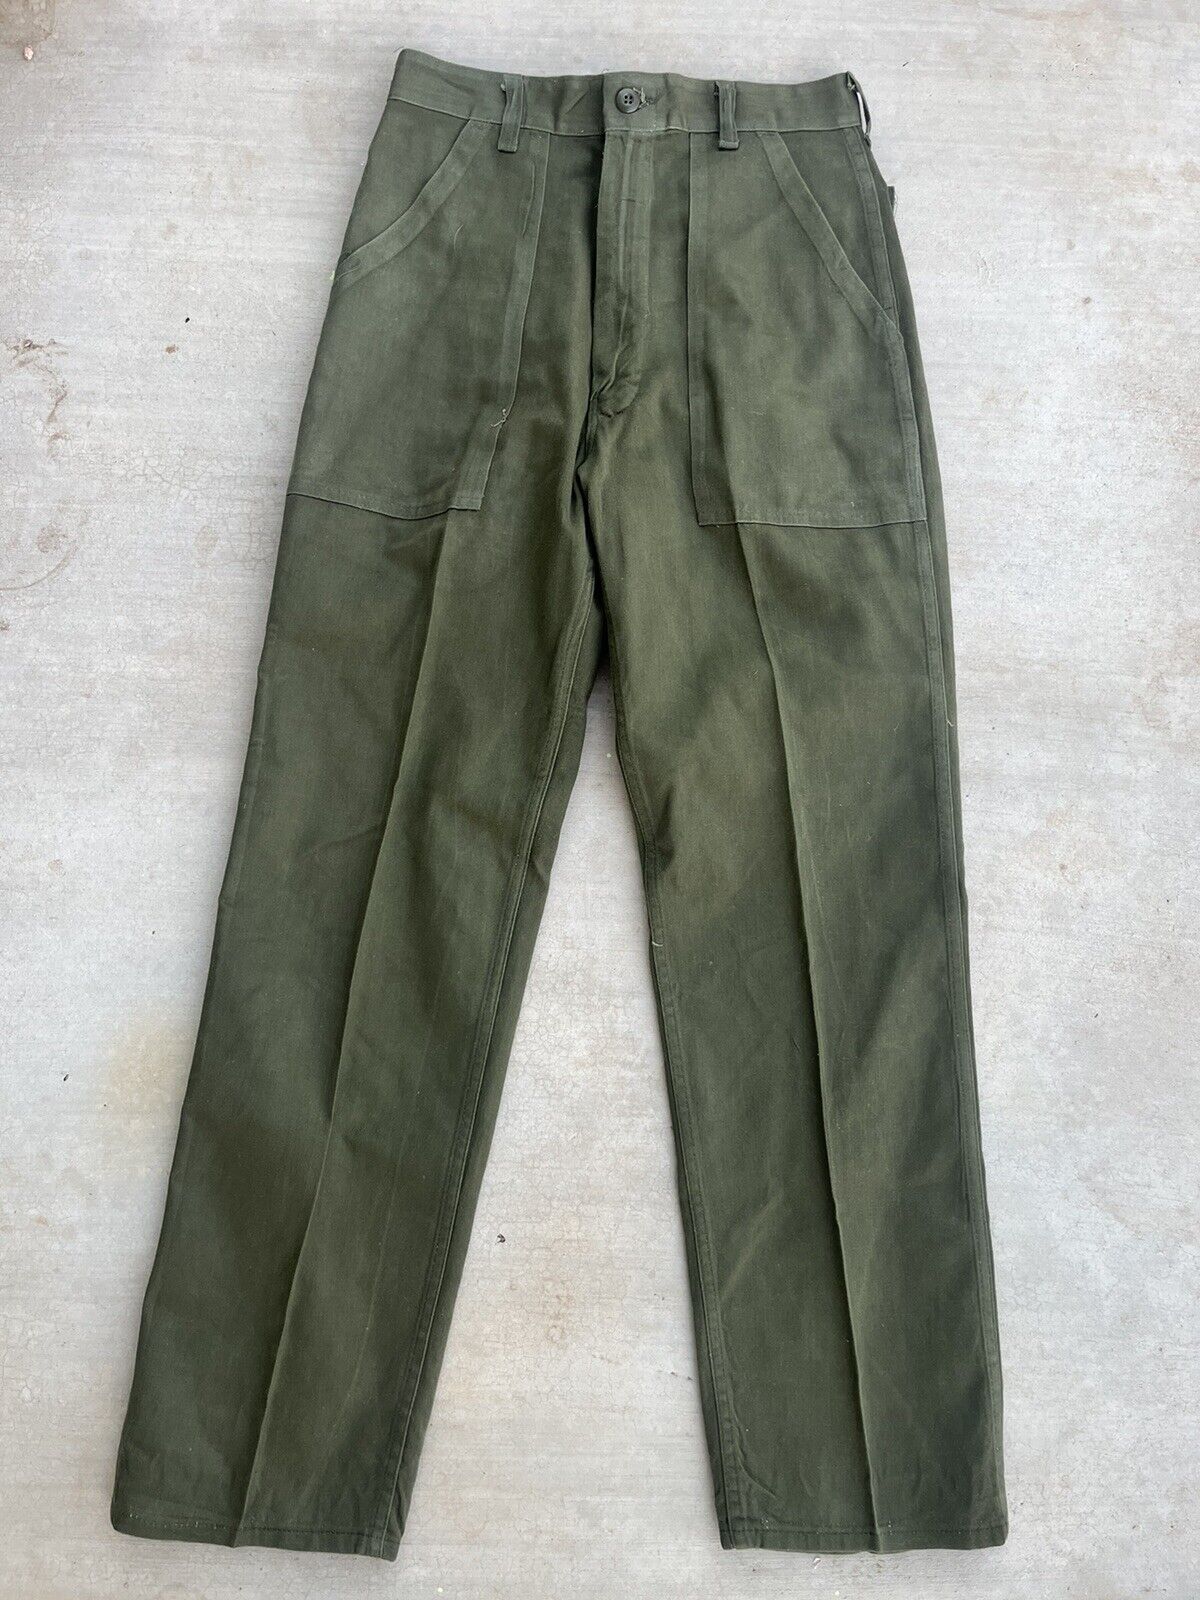 Vintage Military Sateen Pants Fatigues Vietnam Era Olive Drab Green Hayes 32x32